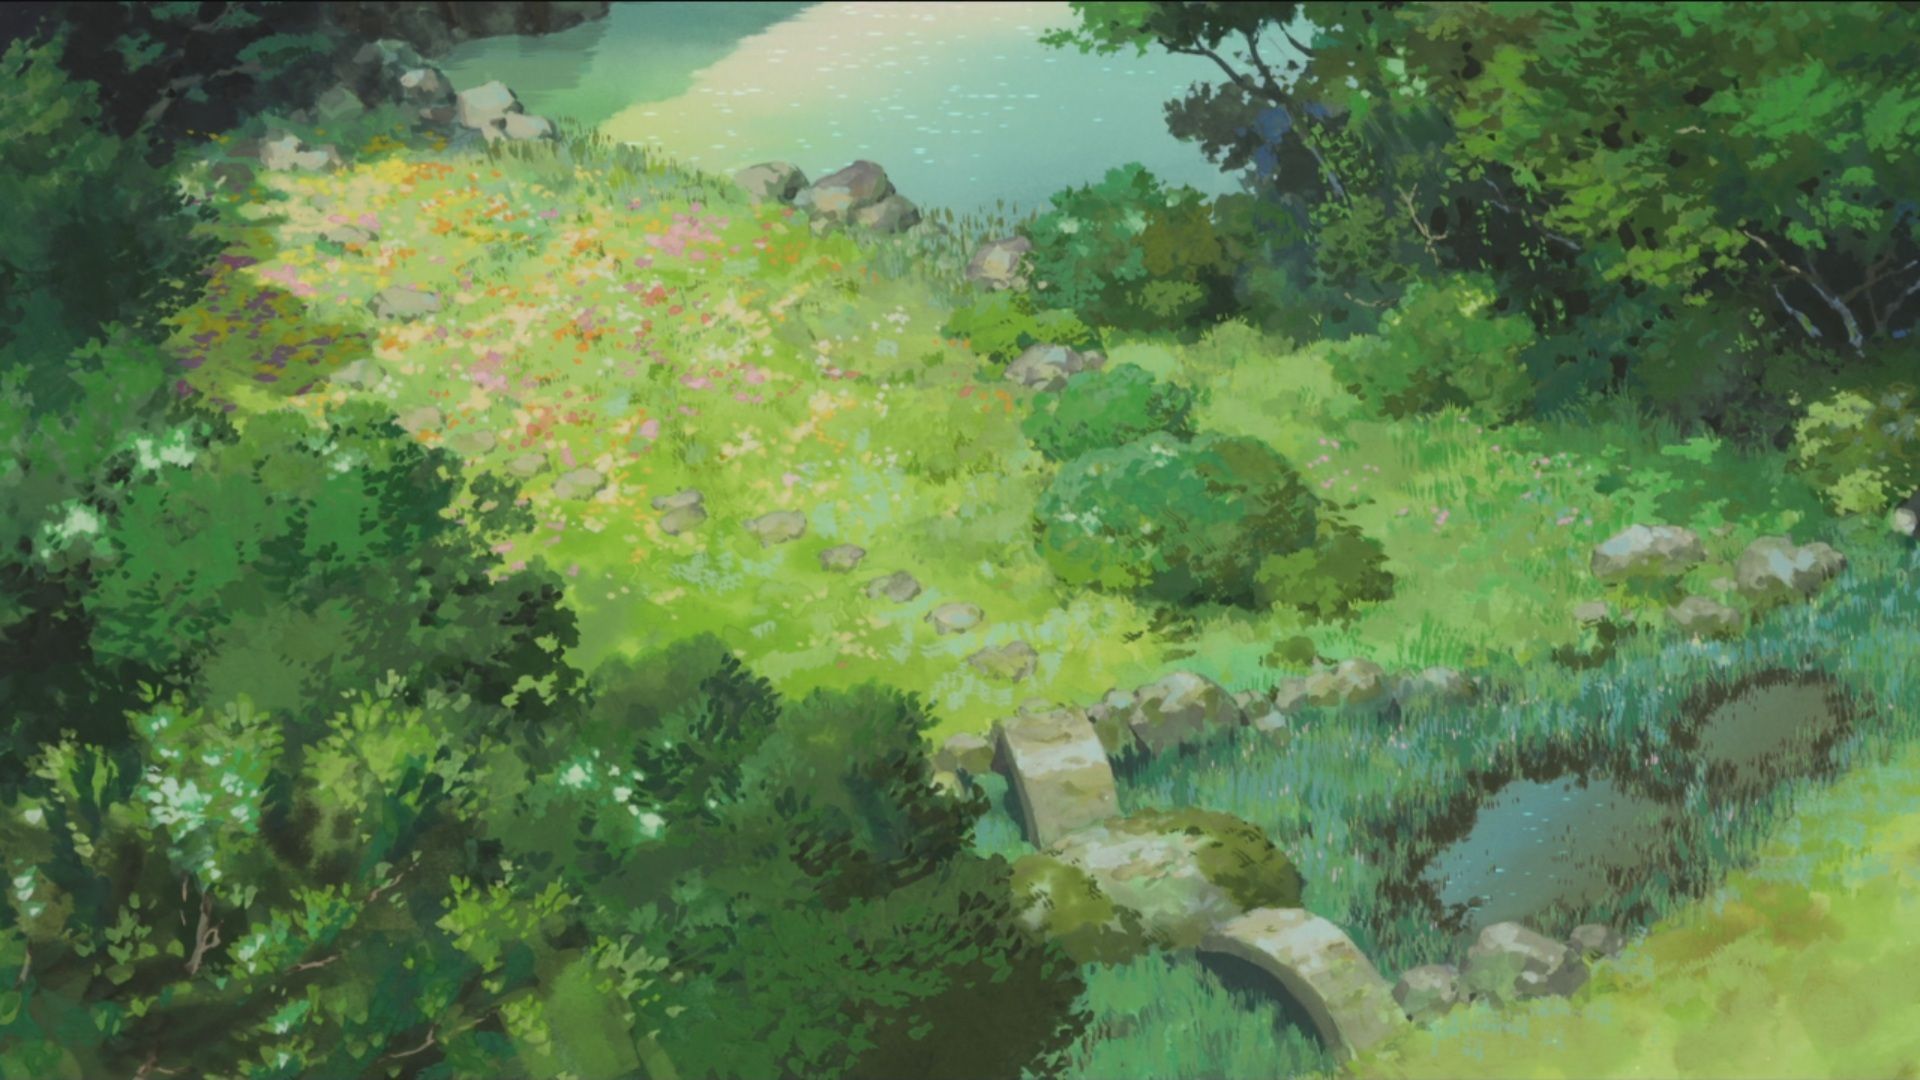 Anime Scenery HD Wallpaper and Background. Anime scenery, Secret world of arrietty, Scenery